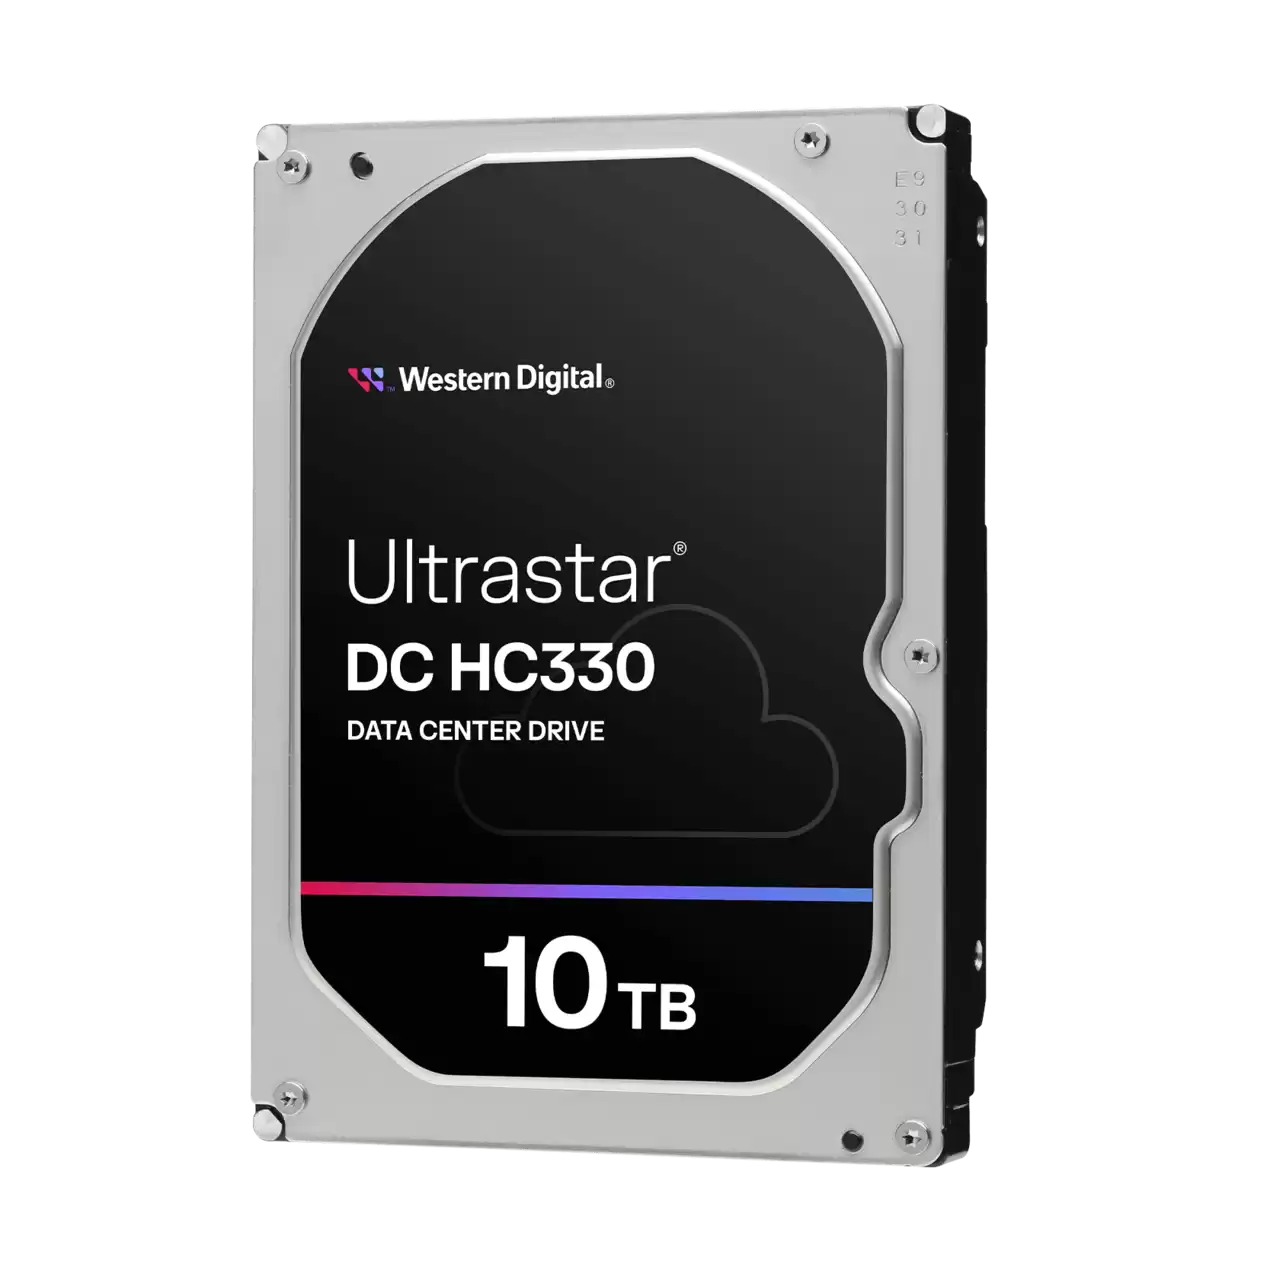 WD HGST Ultrastar DC HC330 Air 10TB 7200rpm 256MB 3.5" Enterprise HDD (WUS721010ALE6L4)